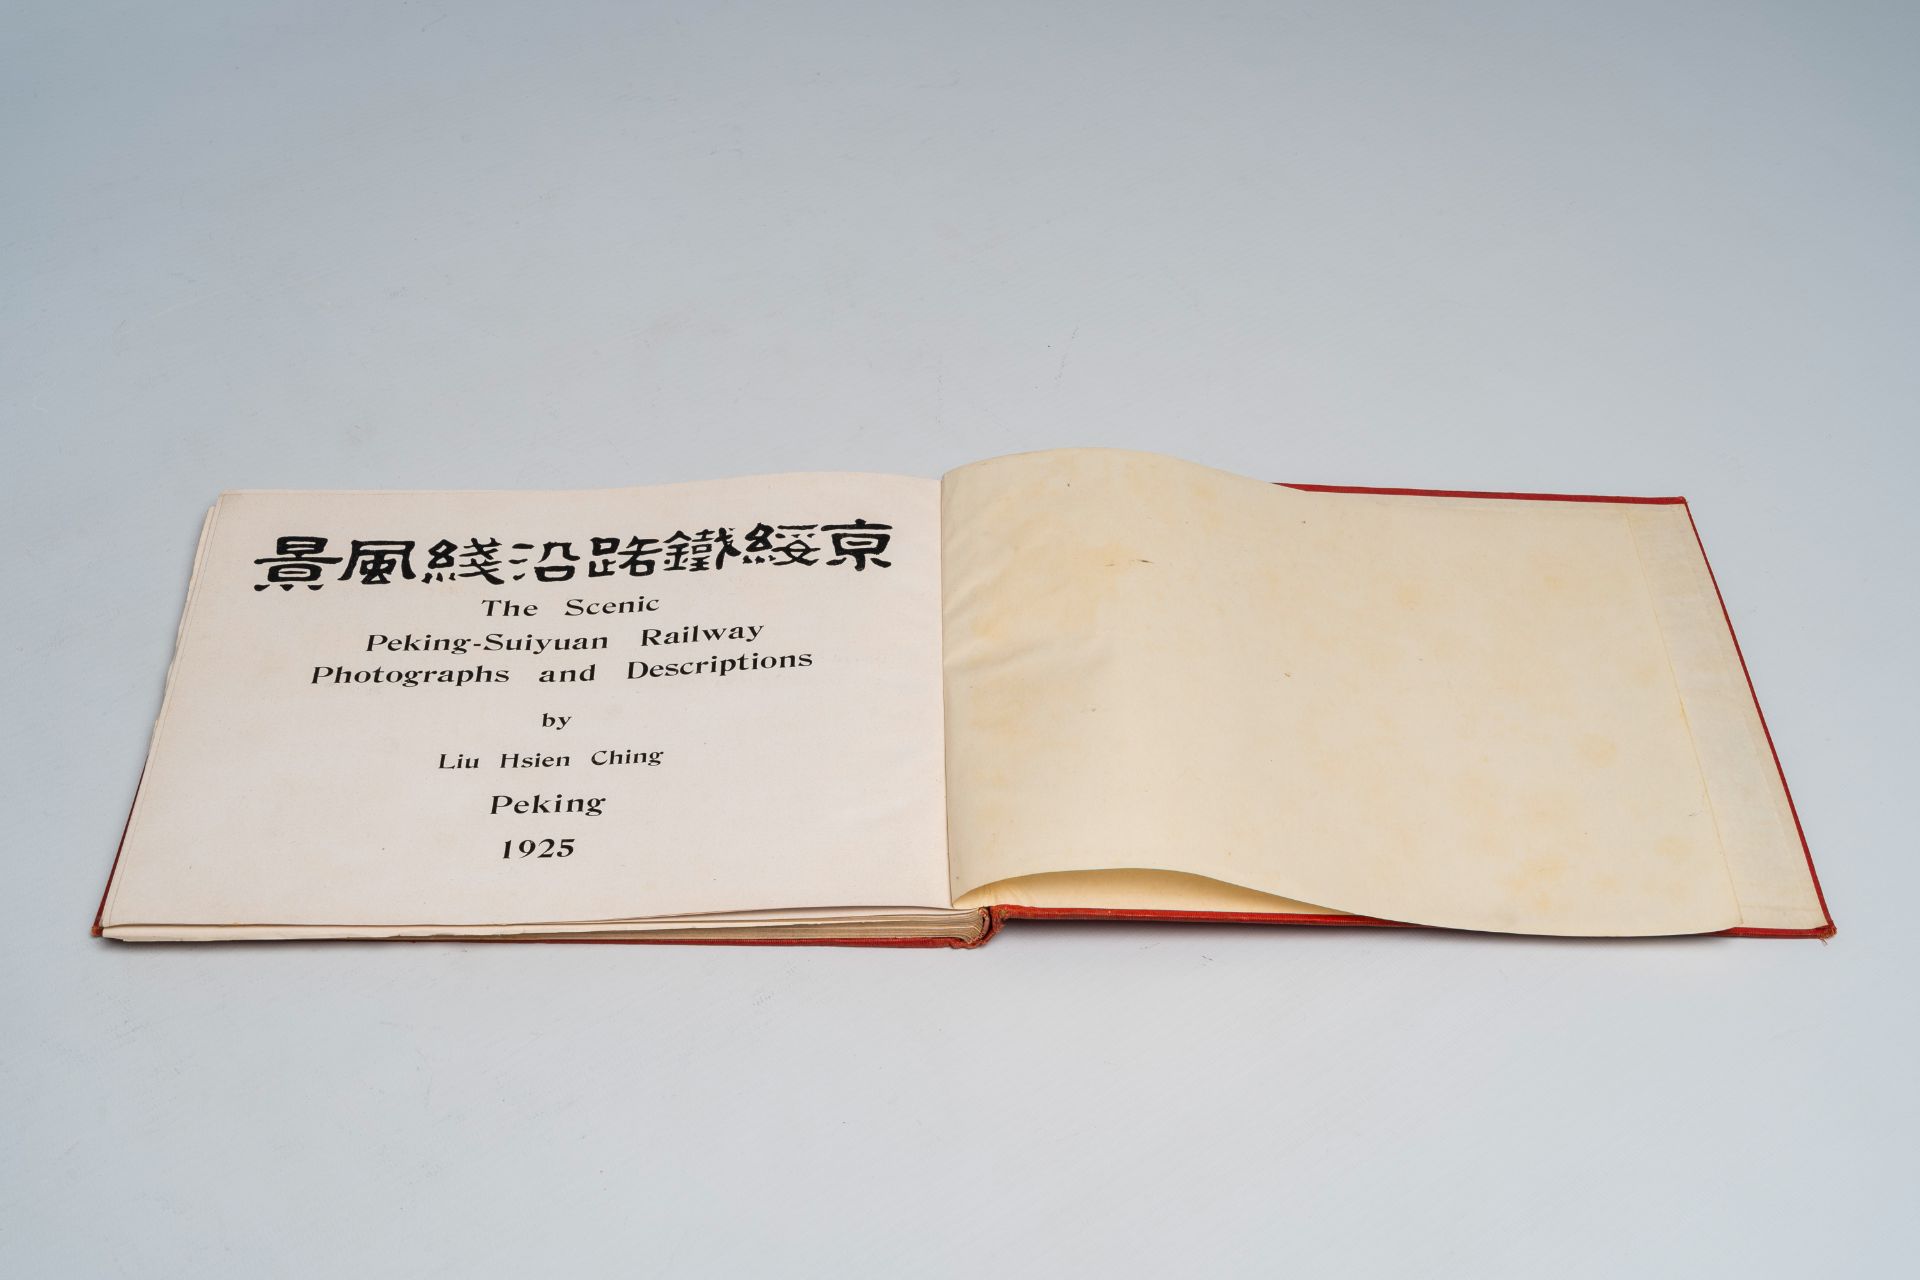 Liu Hsien Ching: 'The Scenic Peking-Suiyuan Railway. Photographs and Descriptions', Beijing, 1925 - Image 4 of 13